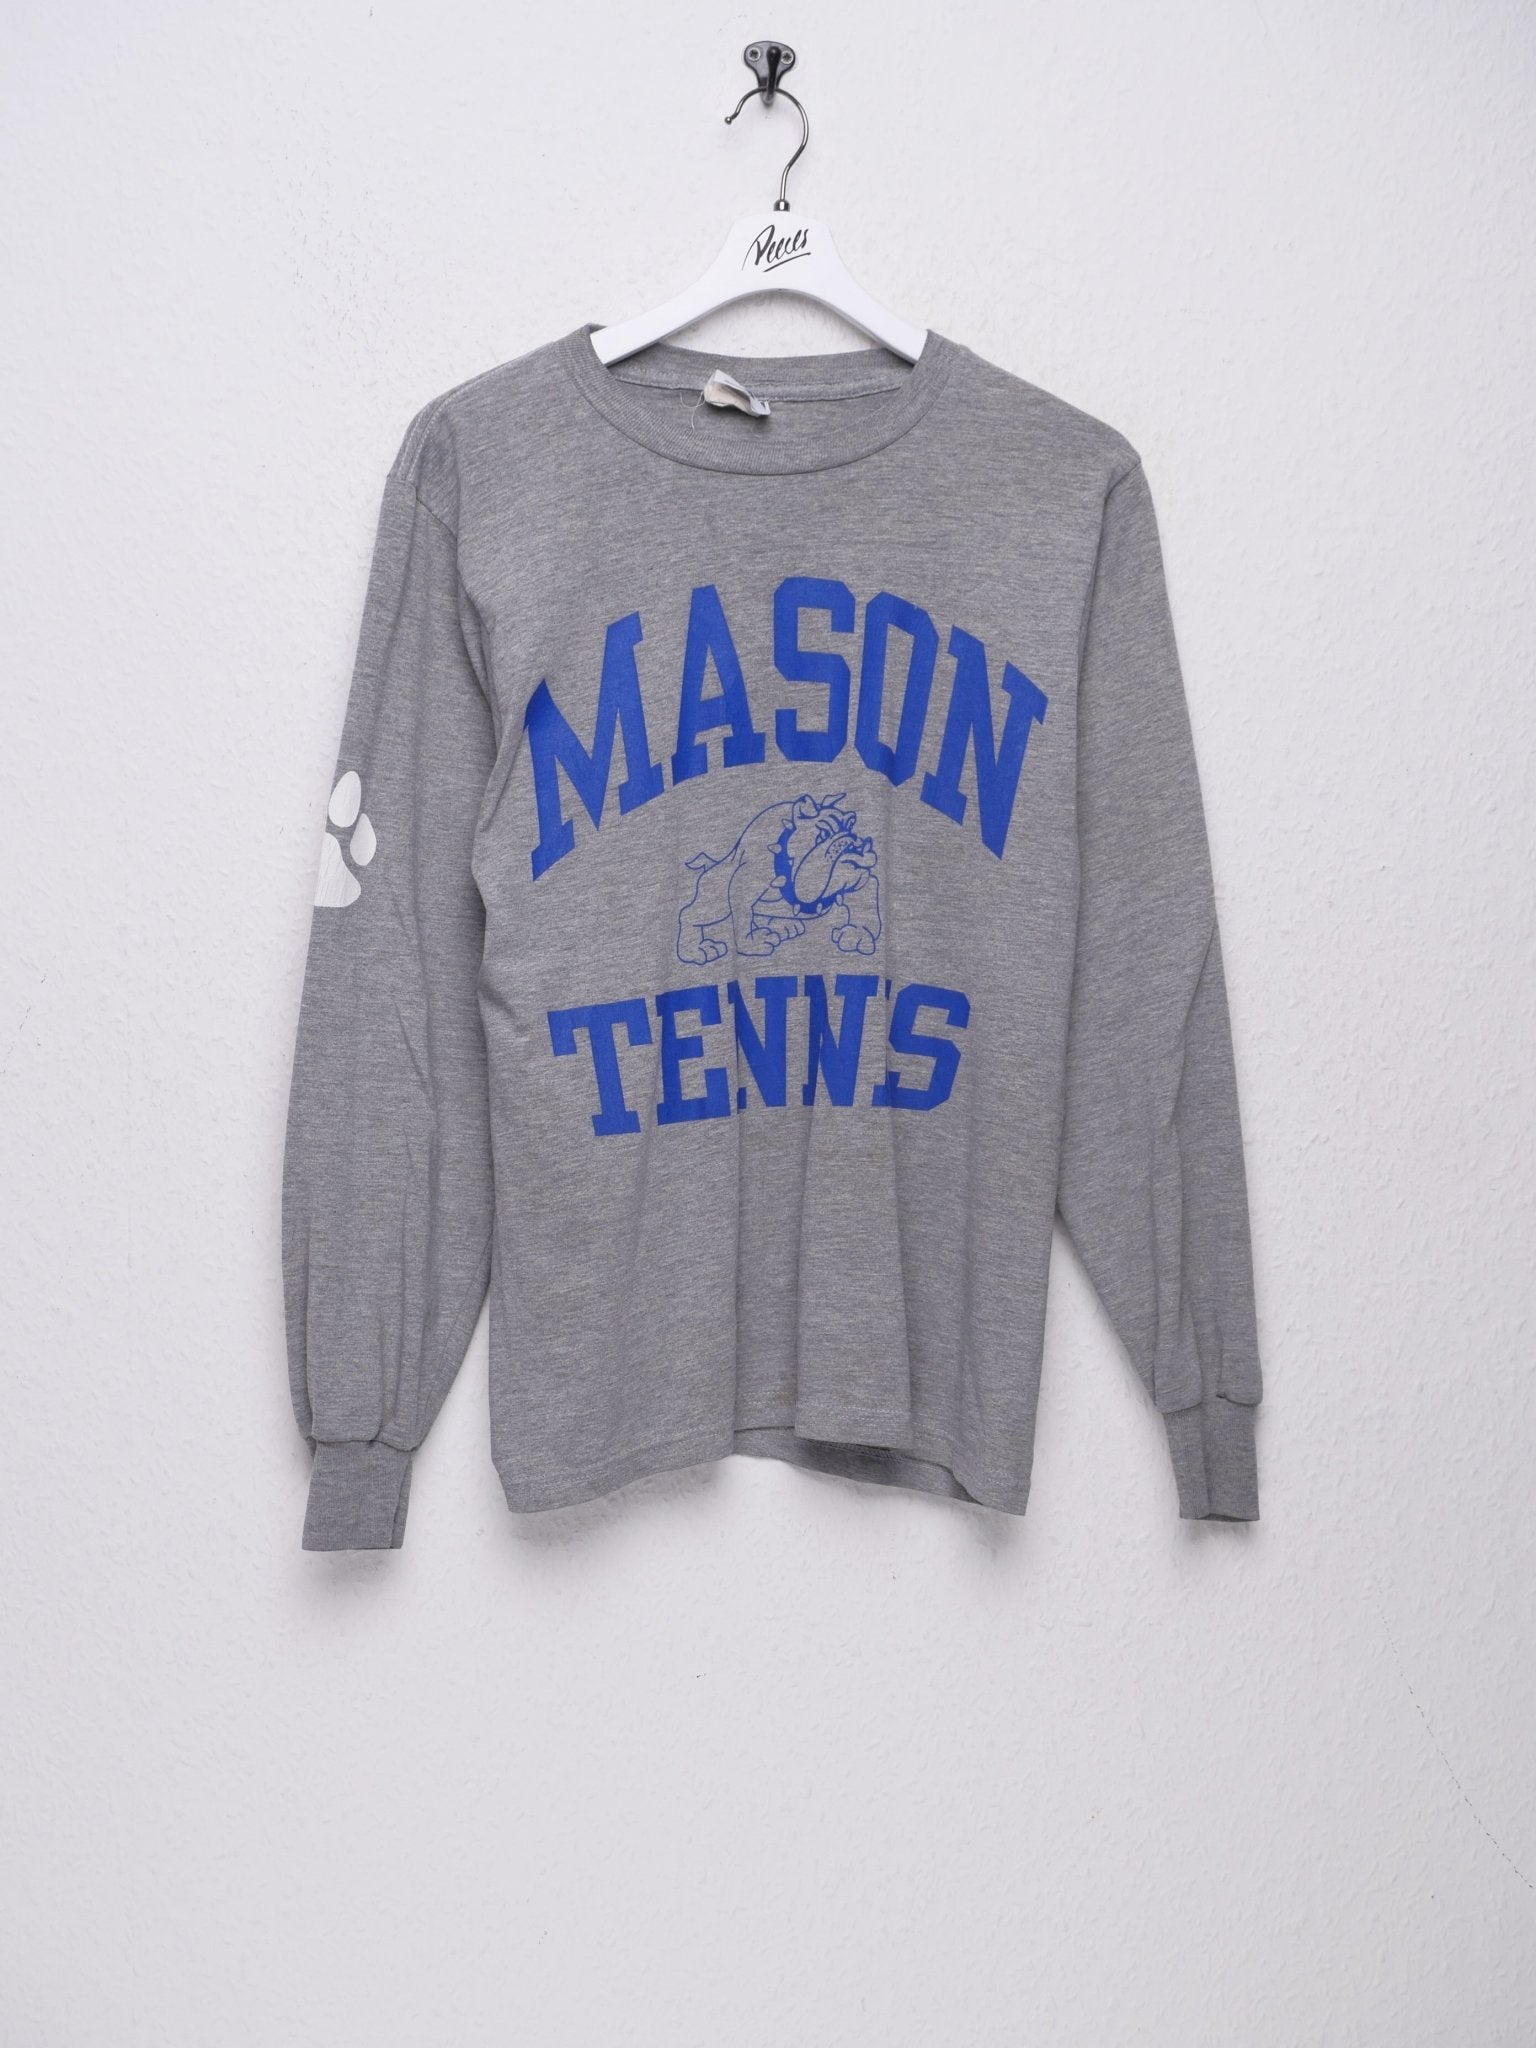 Mason Tennis printed Graphic grey L/S Shirt - Peeces